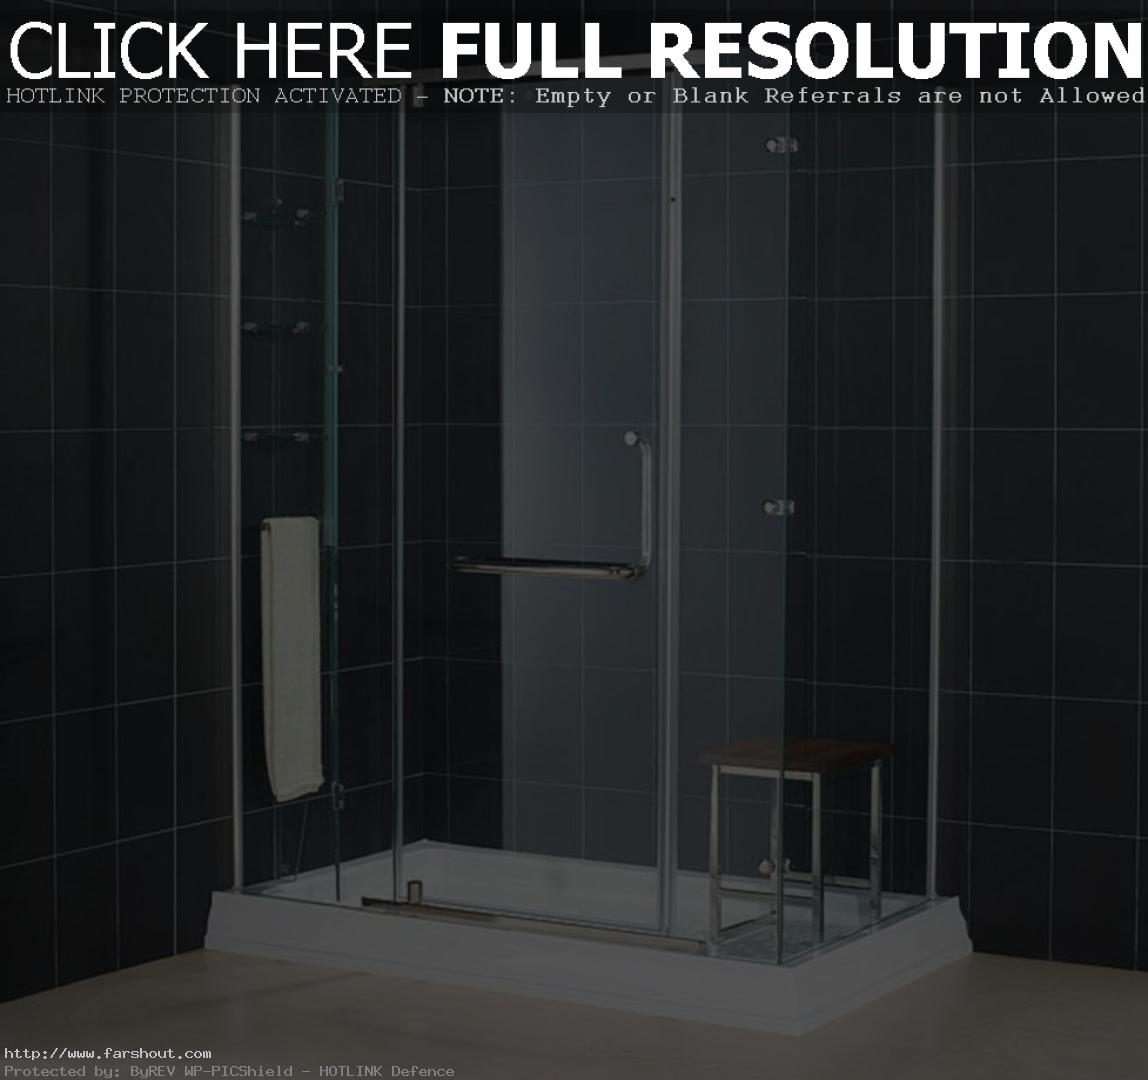 italian-bathroom-tiles-ideas-magnificent-modern-italian-bathroom-with-black-wall-tiles-and-Picture-HD-Wallpapers